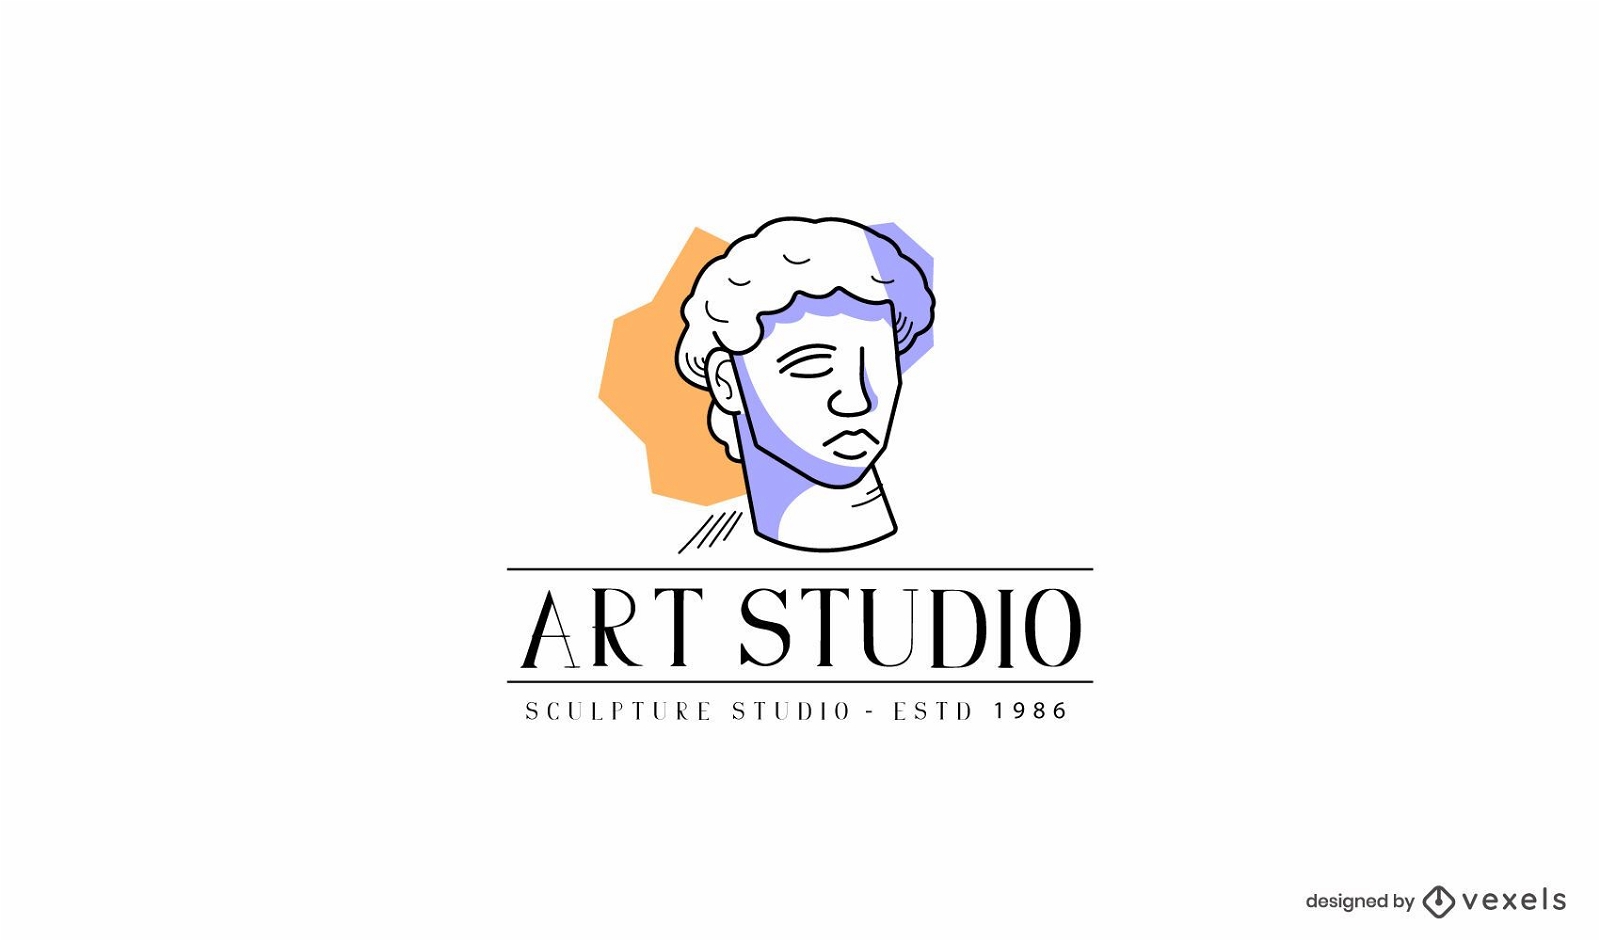 Katurina Art Studio & Design